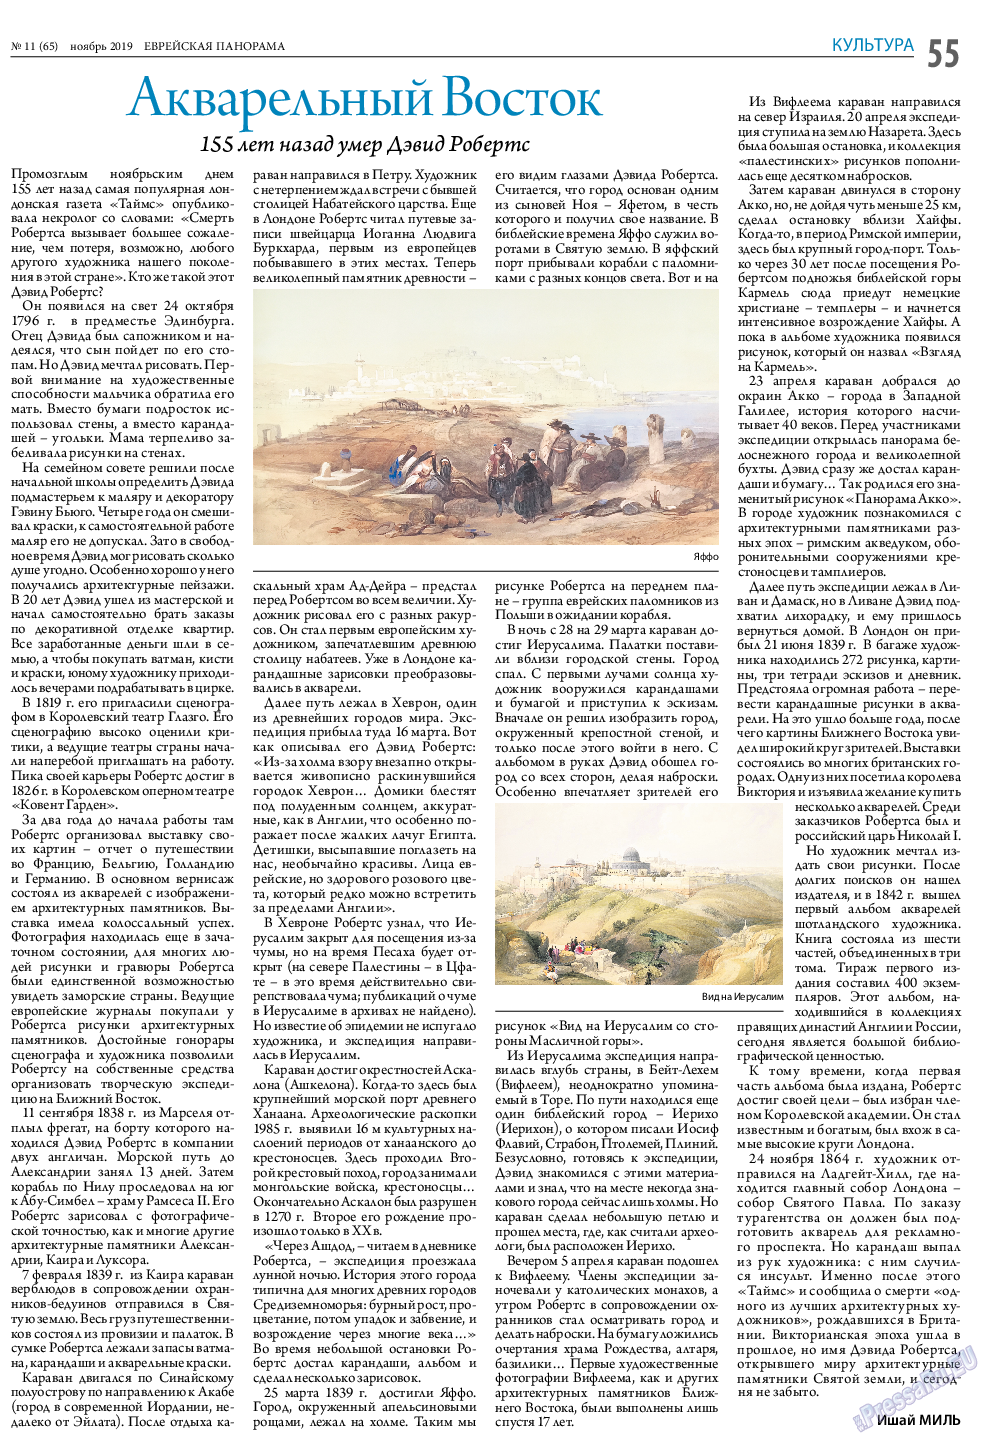 Еврейская панорама, газета. 2019 №11 стр.55